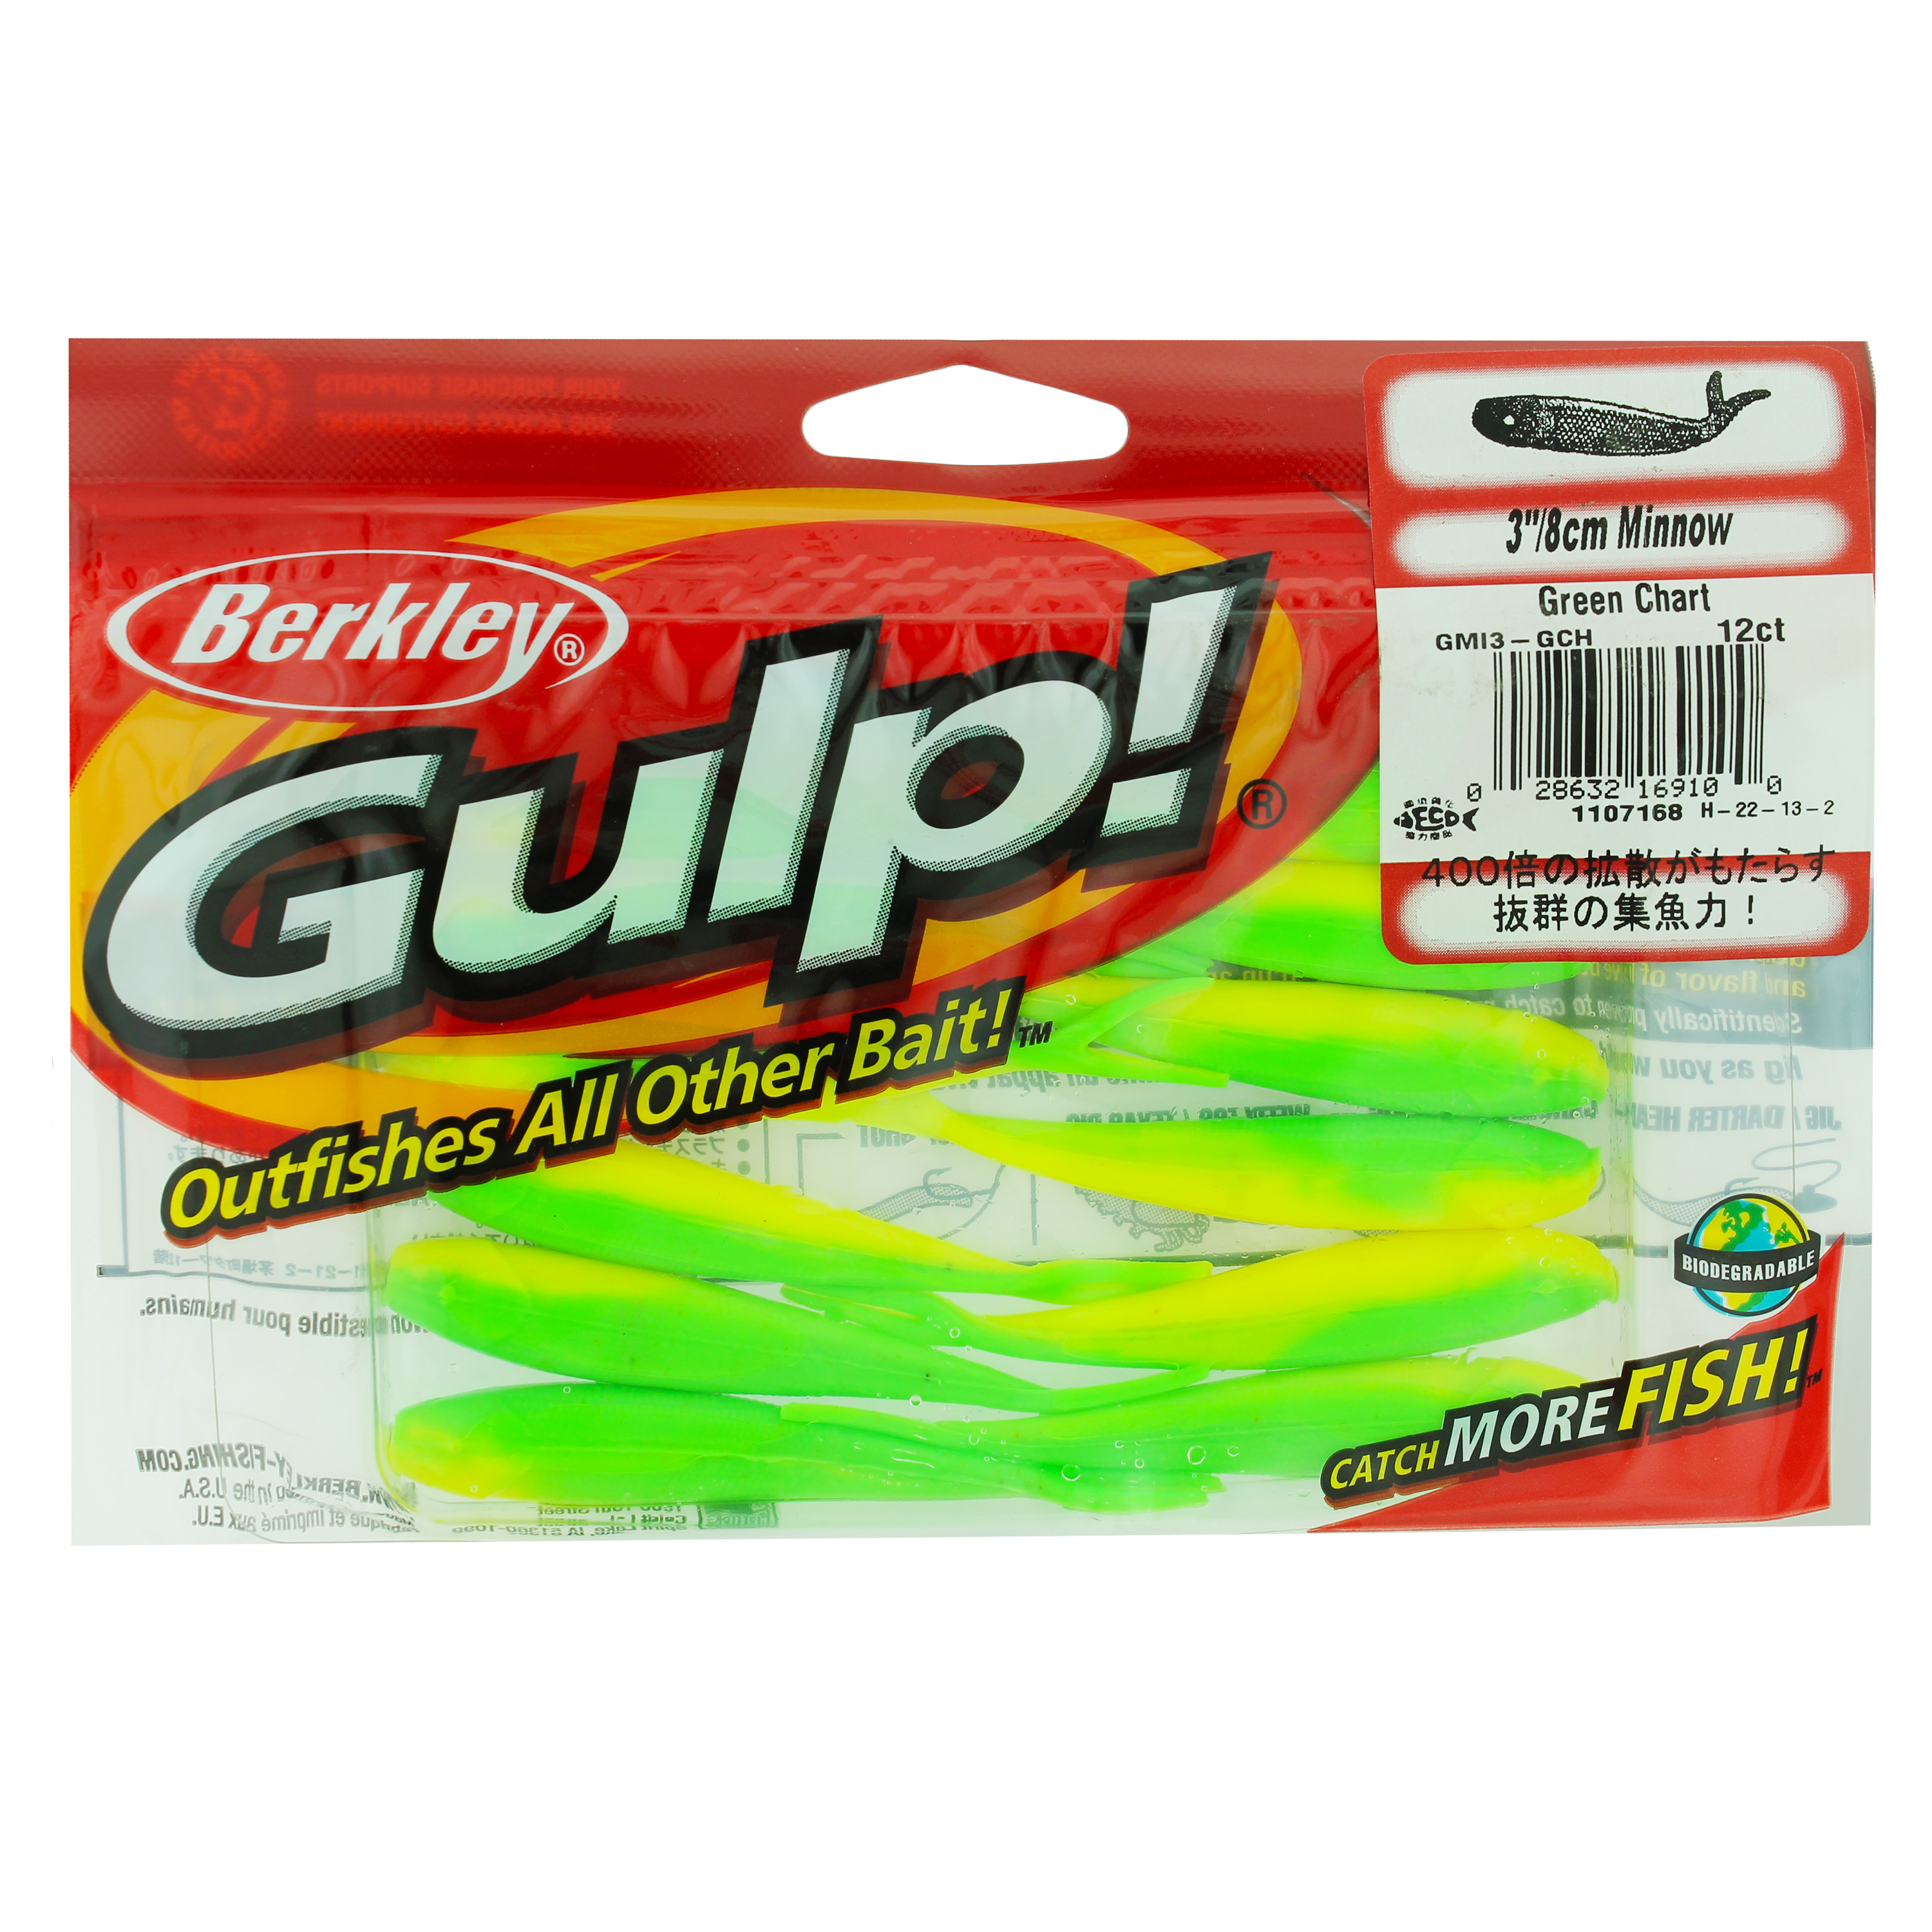 Berkley Gulp! Minnow Soft Bait - image 1 of 2